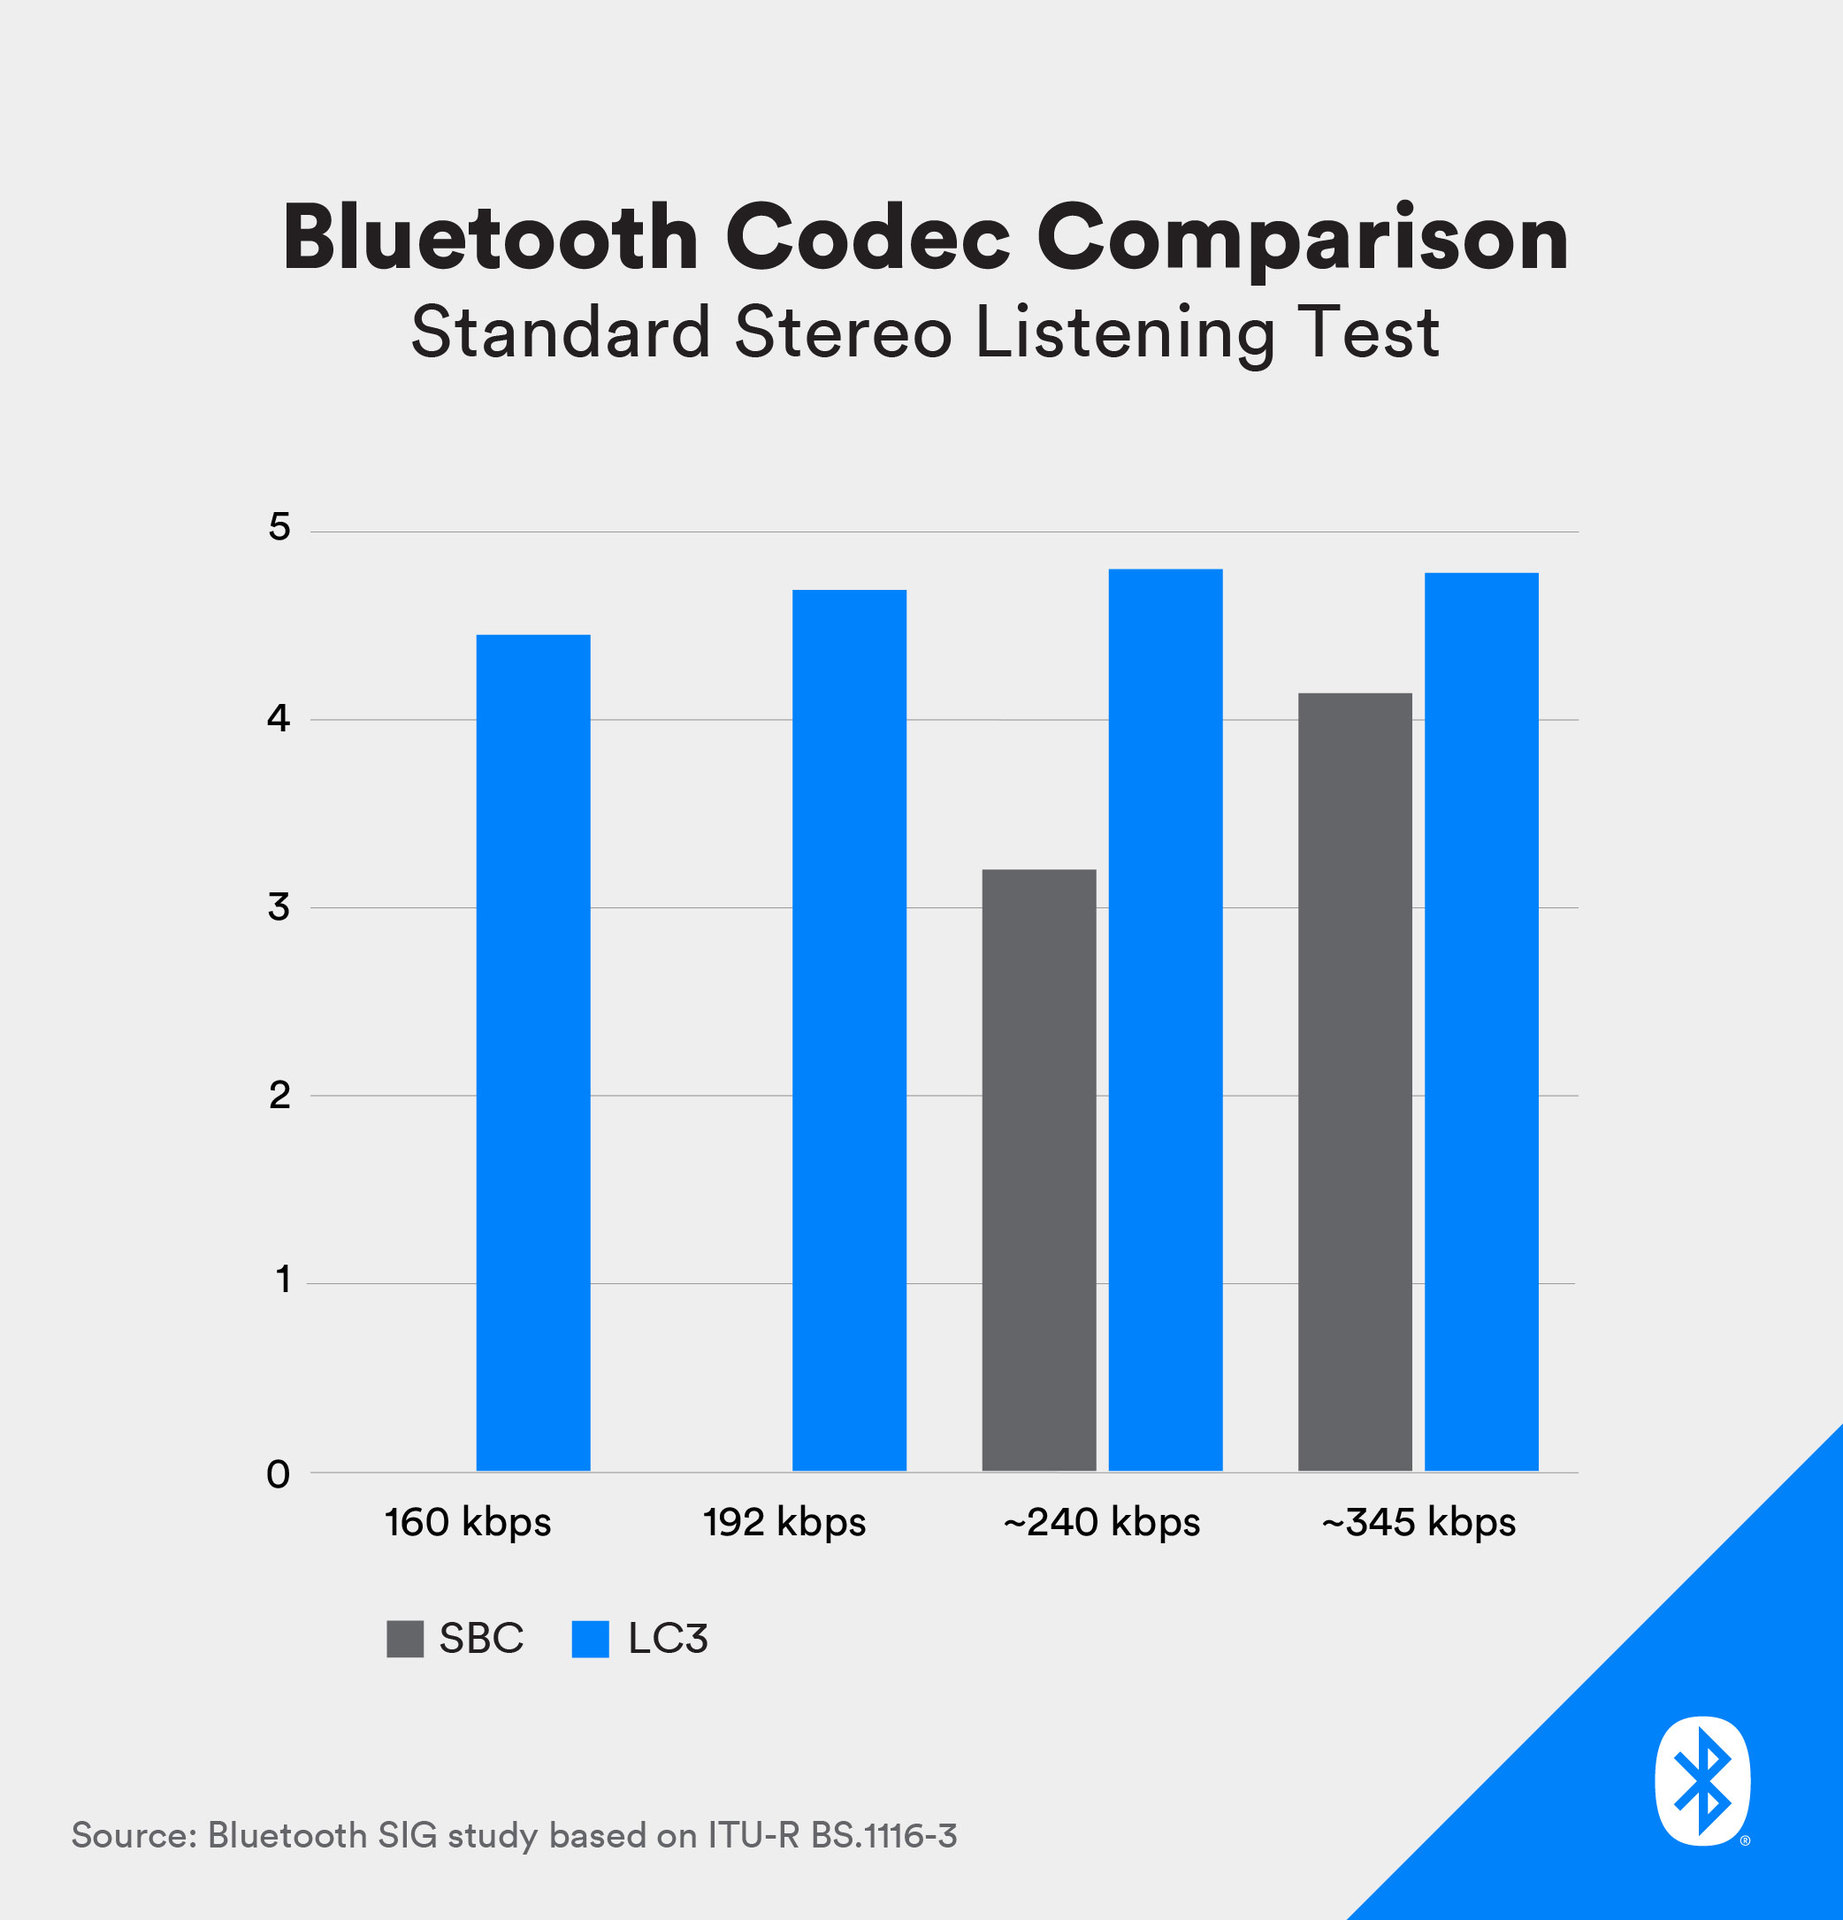 Bluetooth Codec Comparison bar chart.